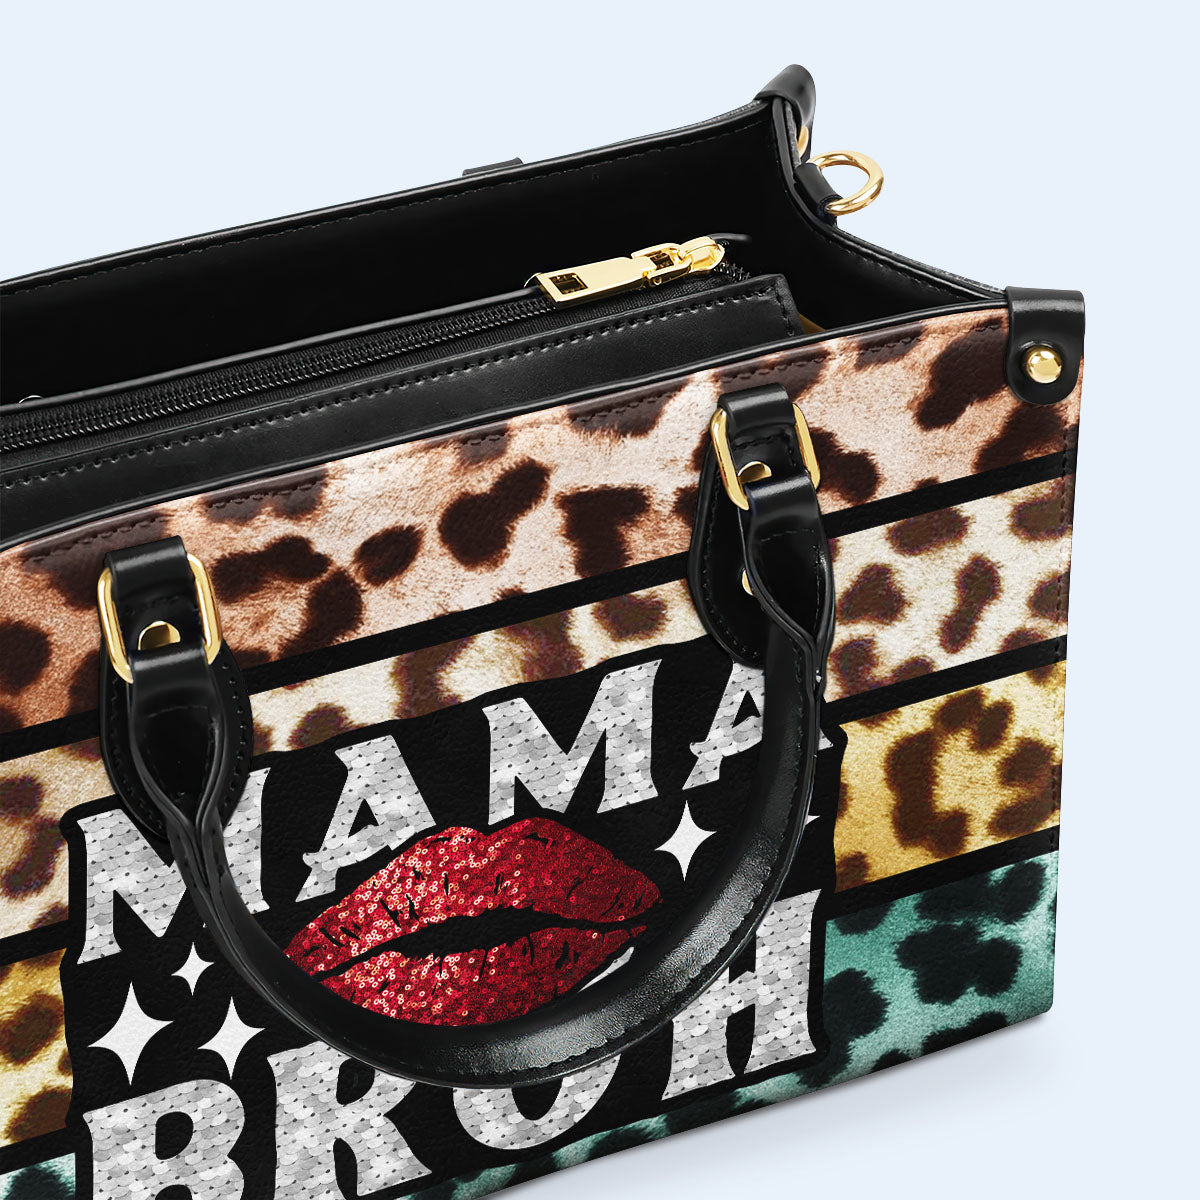 Mama Bruh - Bespoke Leather Handbag - MM03